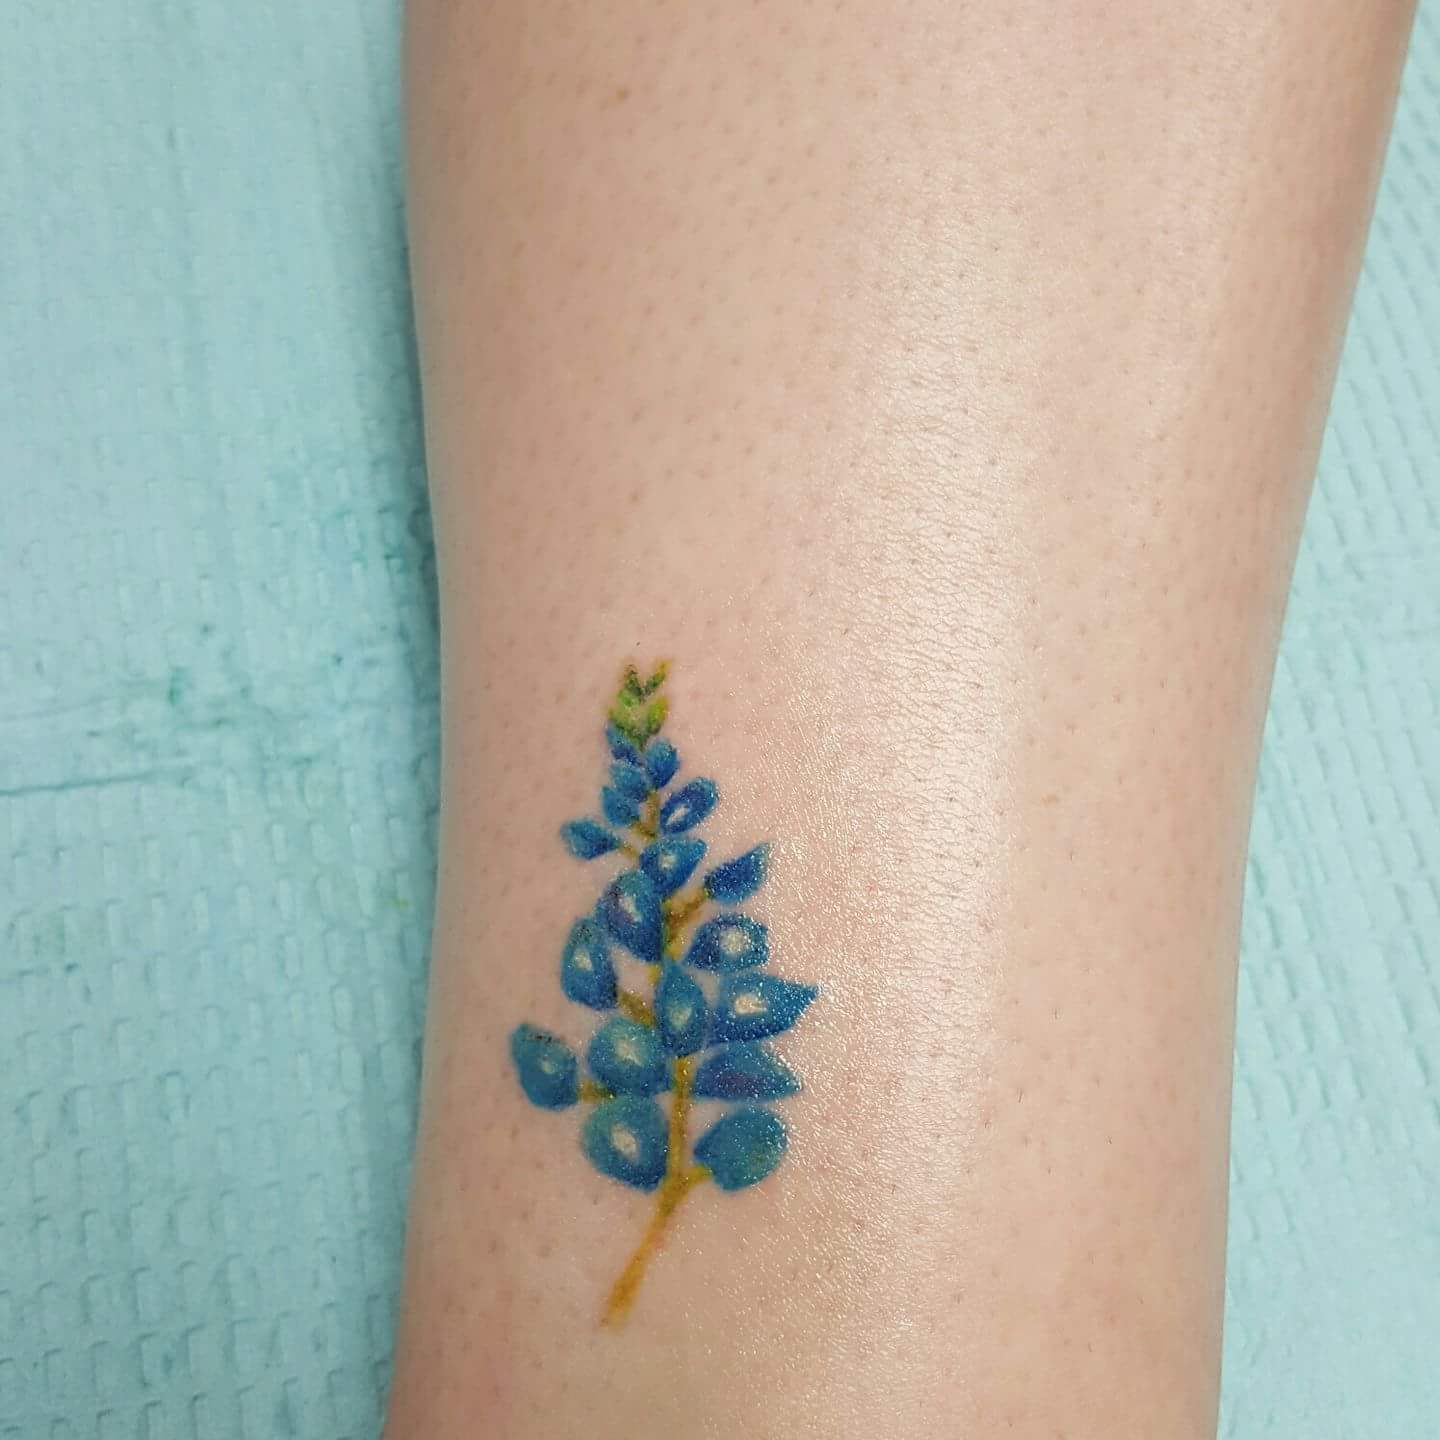 Bluebonnet tattoo on the left leg.